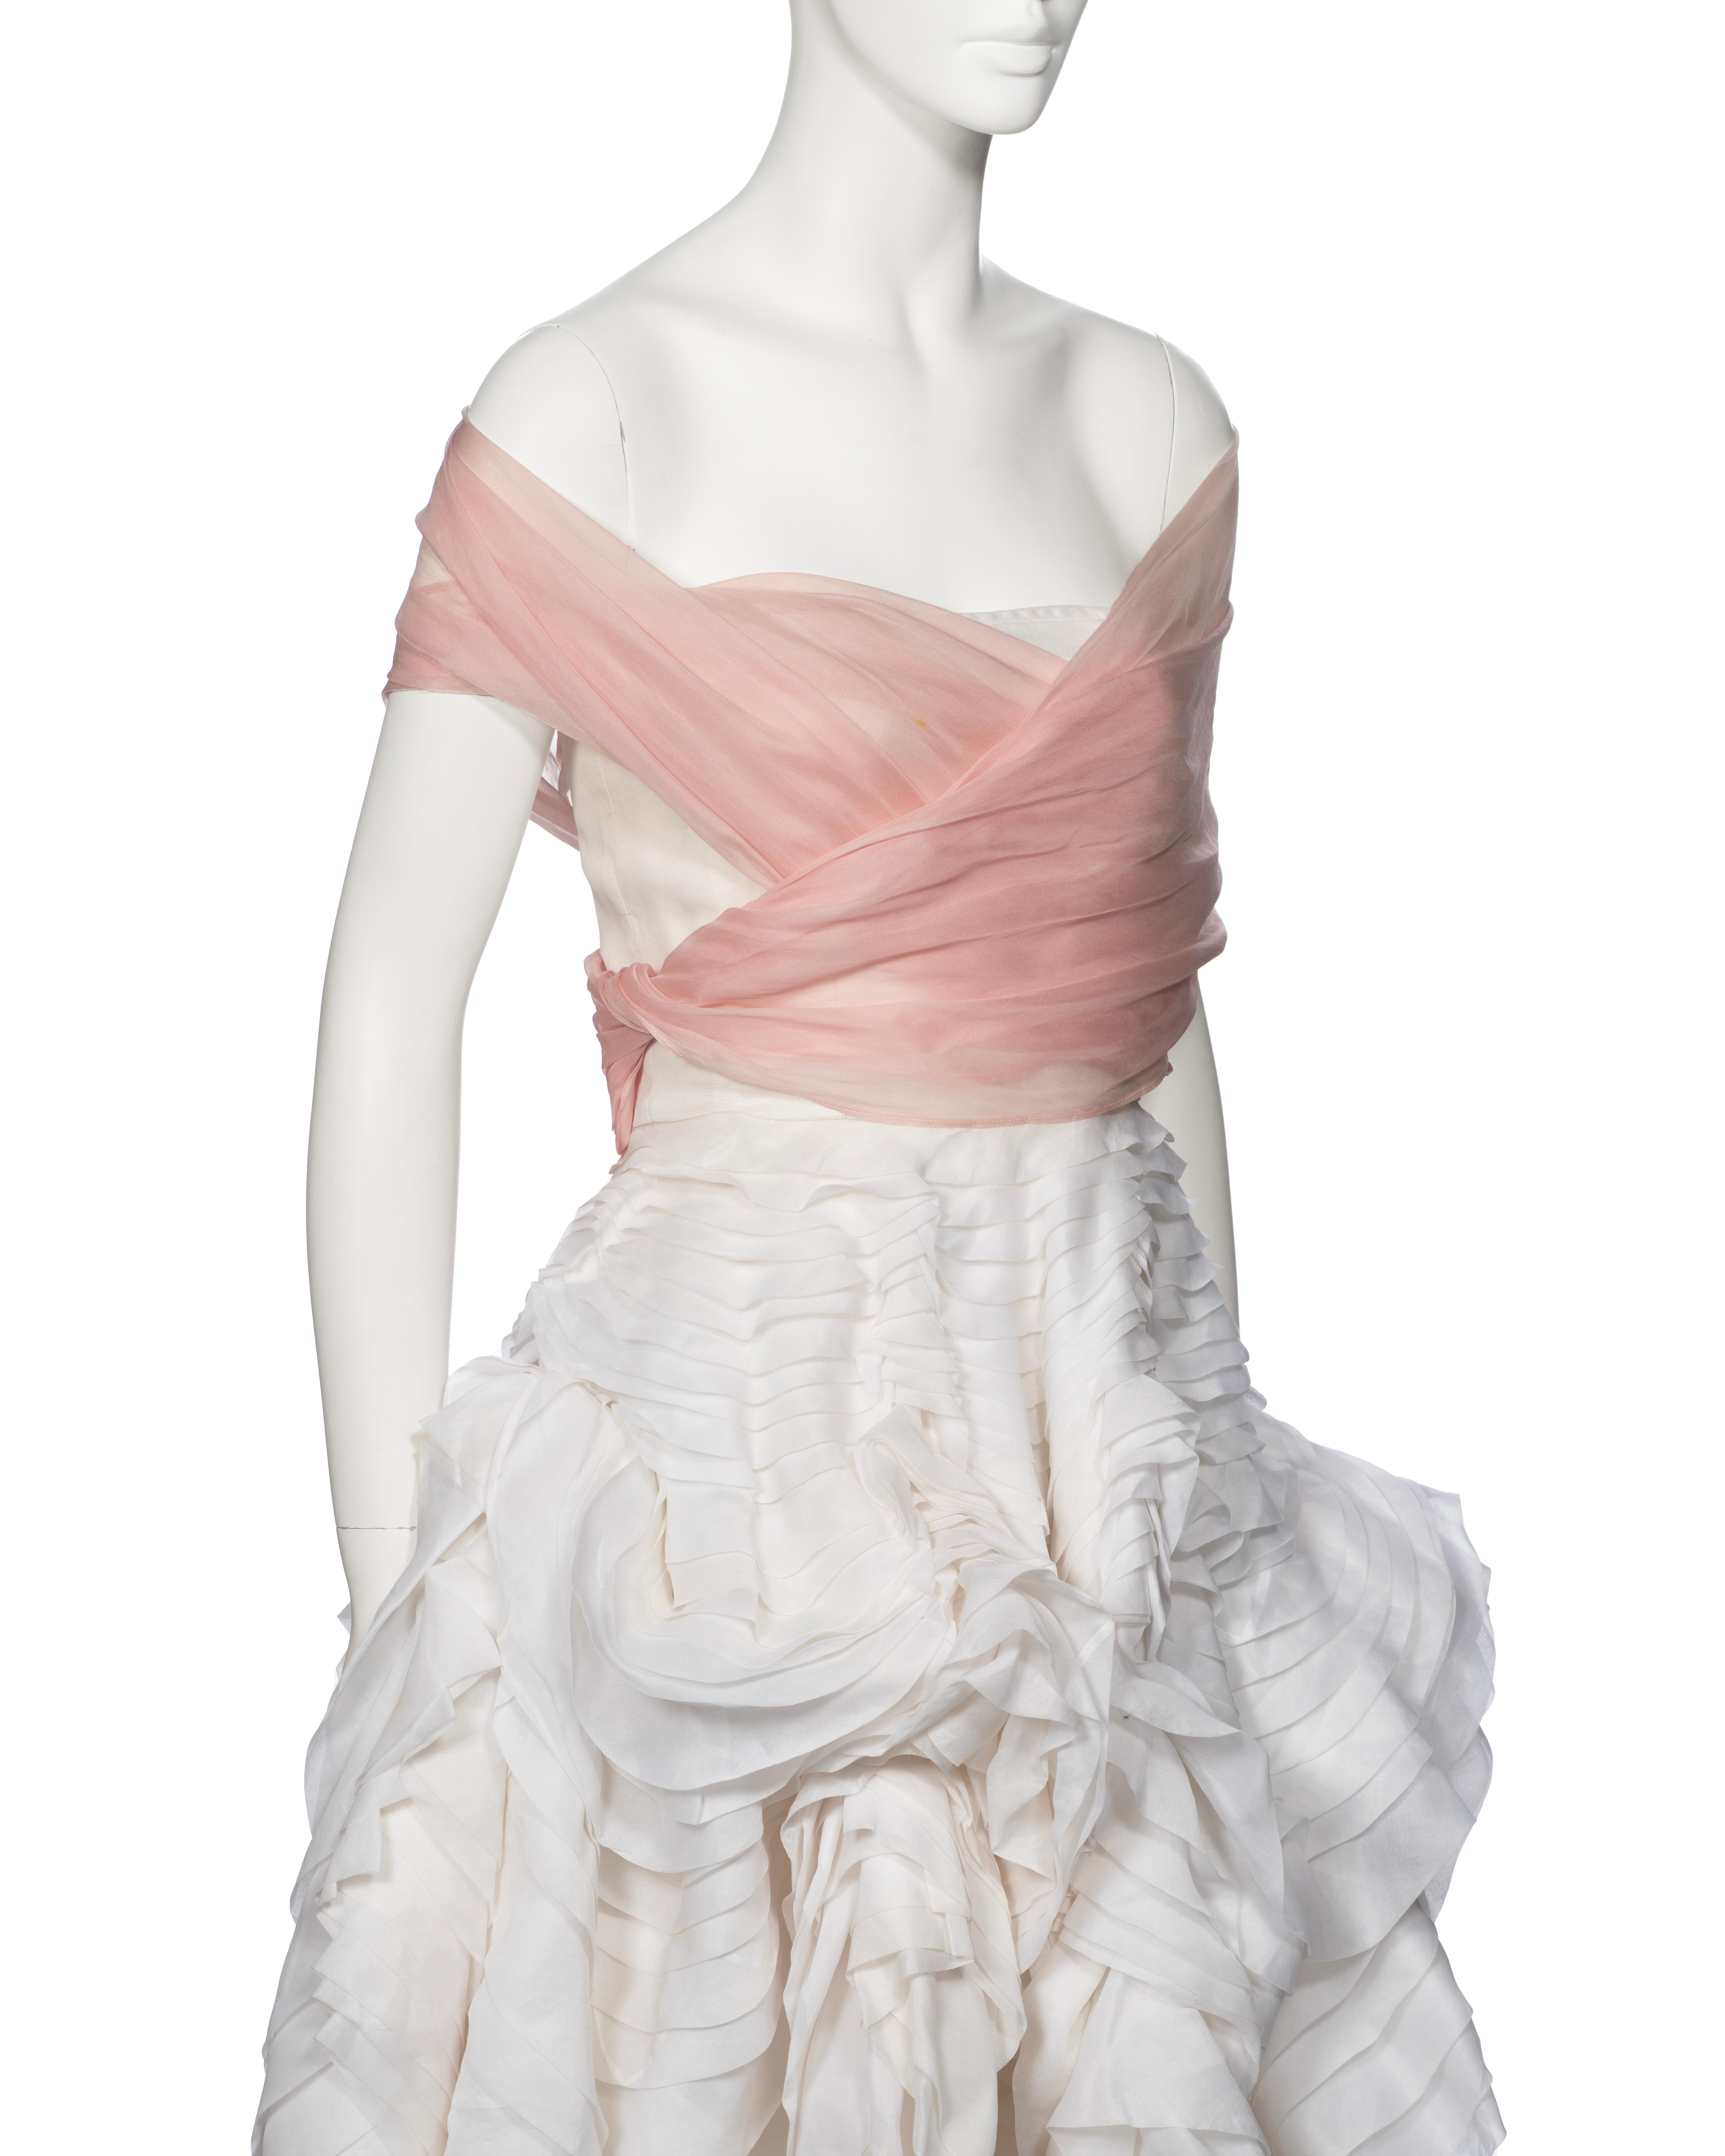 John Galliano Blanche DuBois Clam Dress, ss 1988 For Sale 8